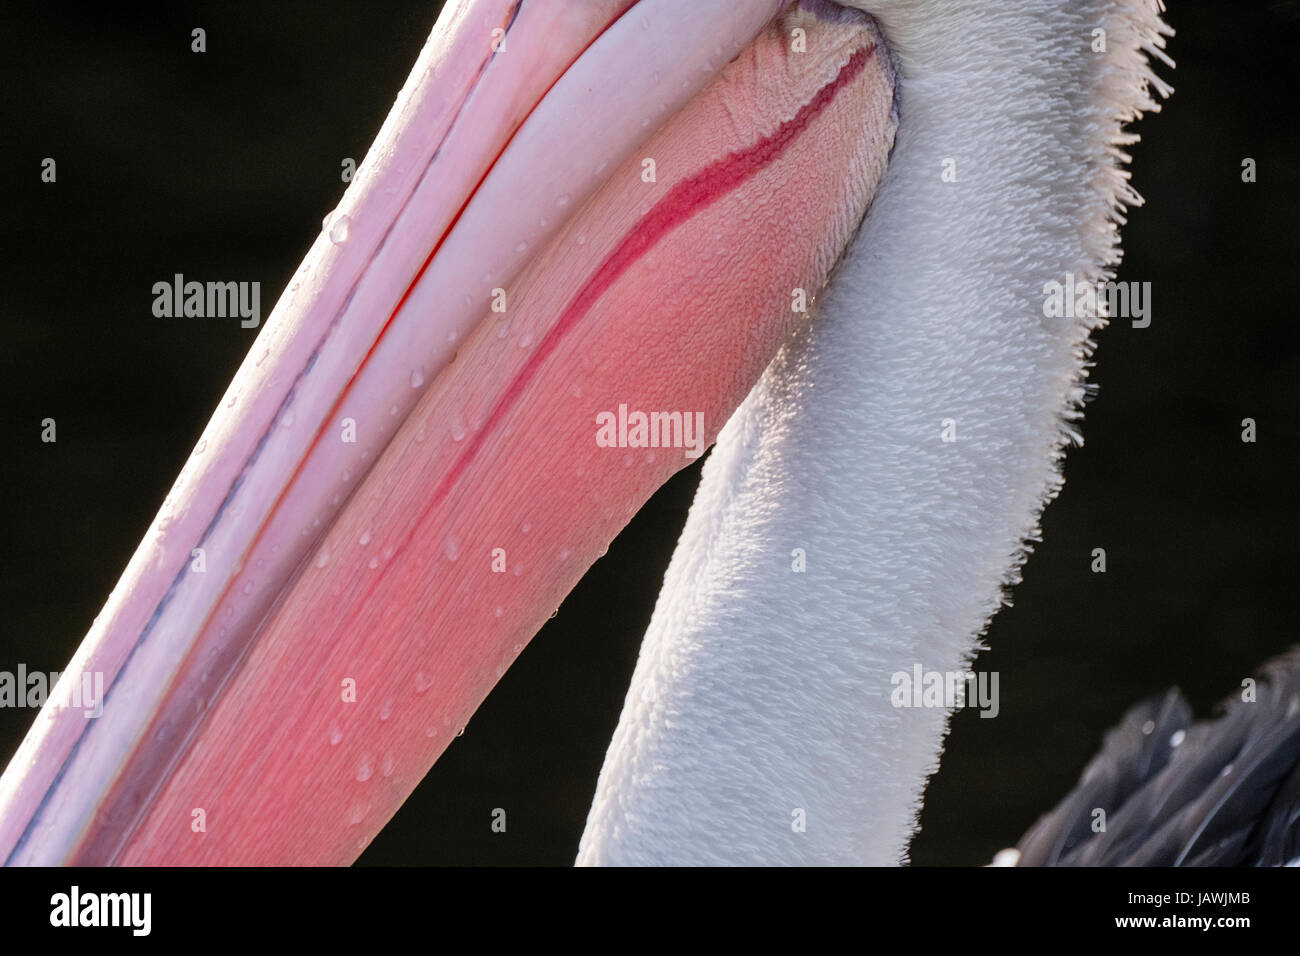 The bright pink flesh of an Australian Pelican bill. Stock Photo